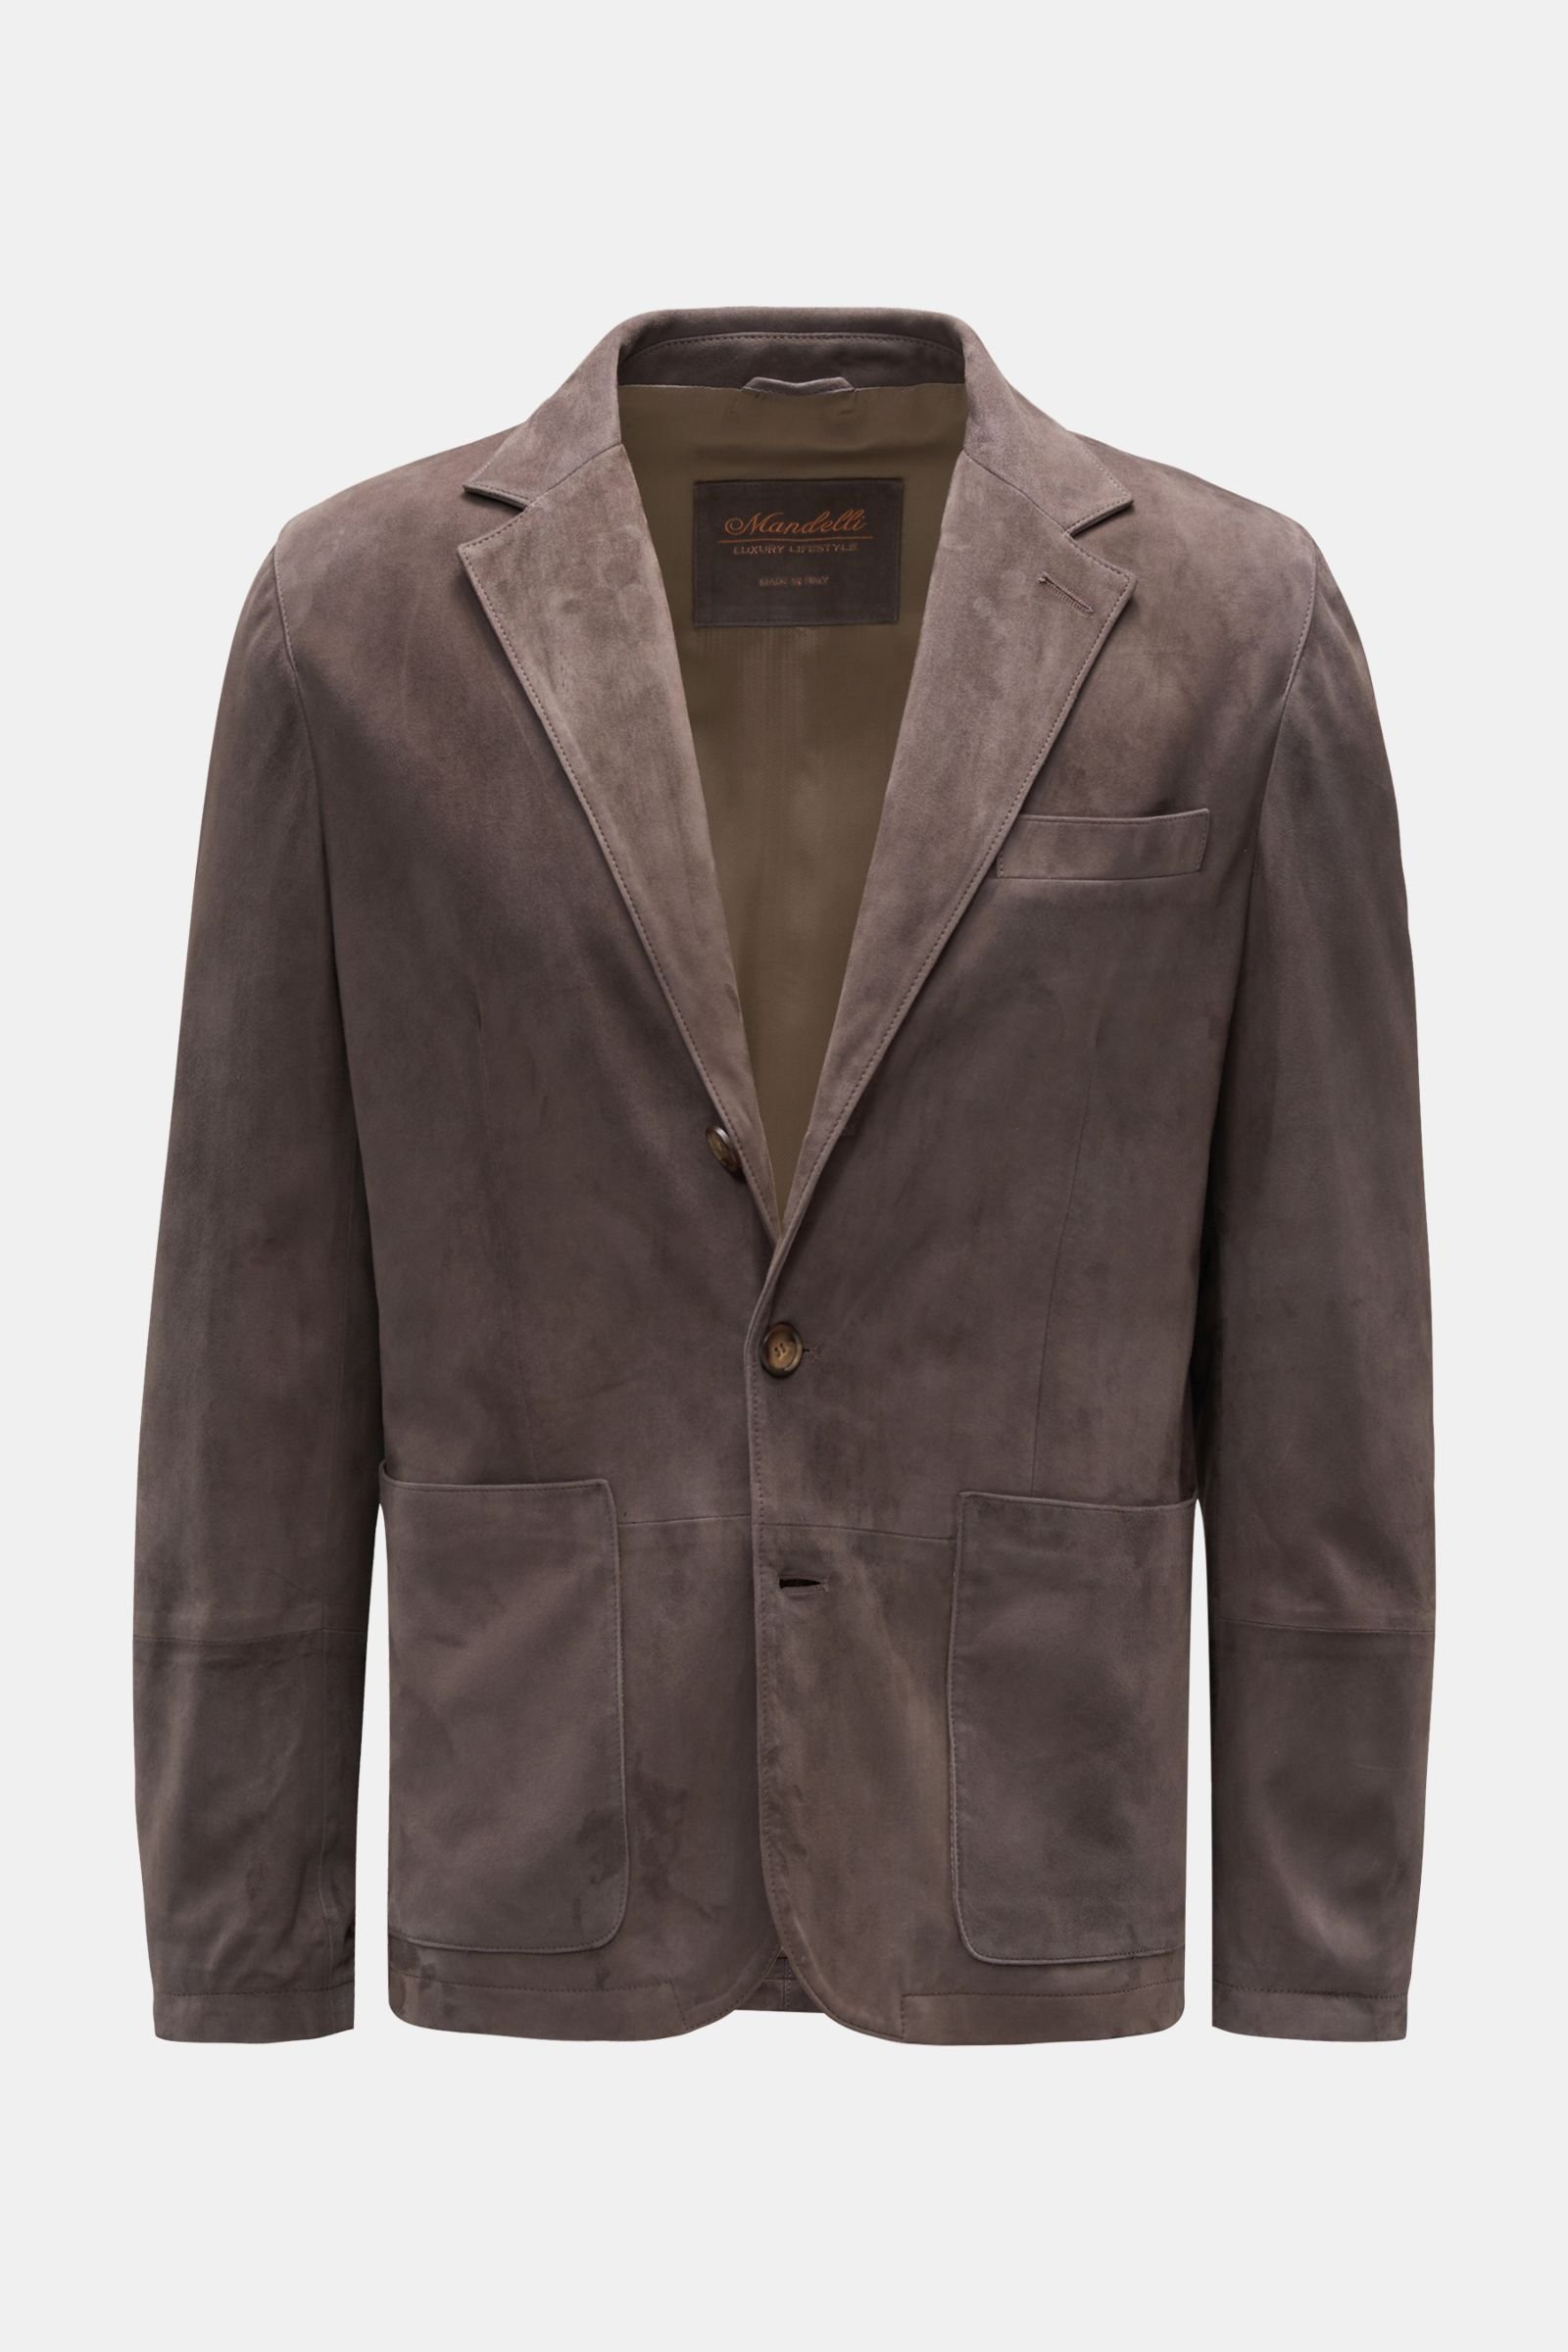 Suede jacket dark brown